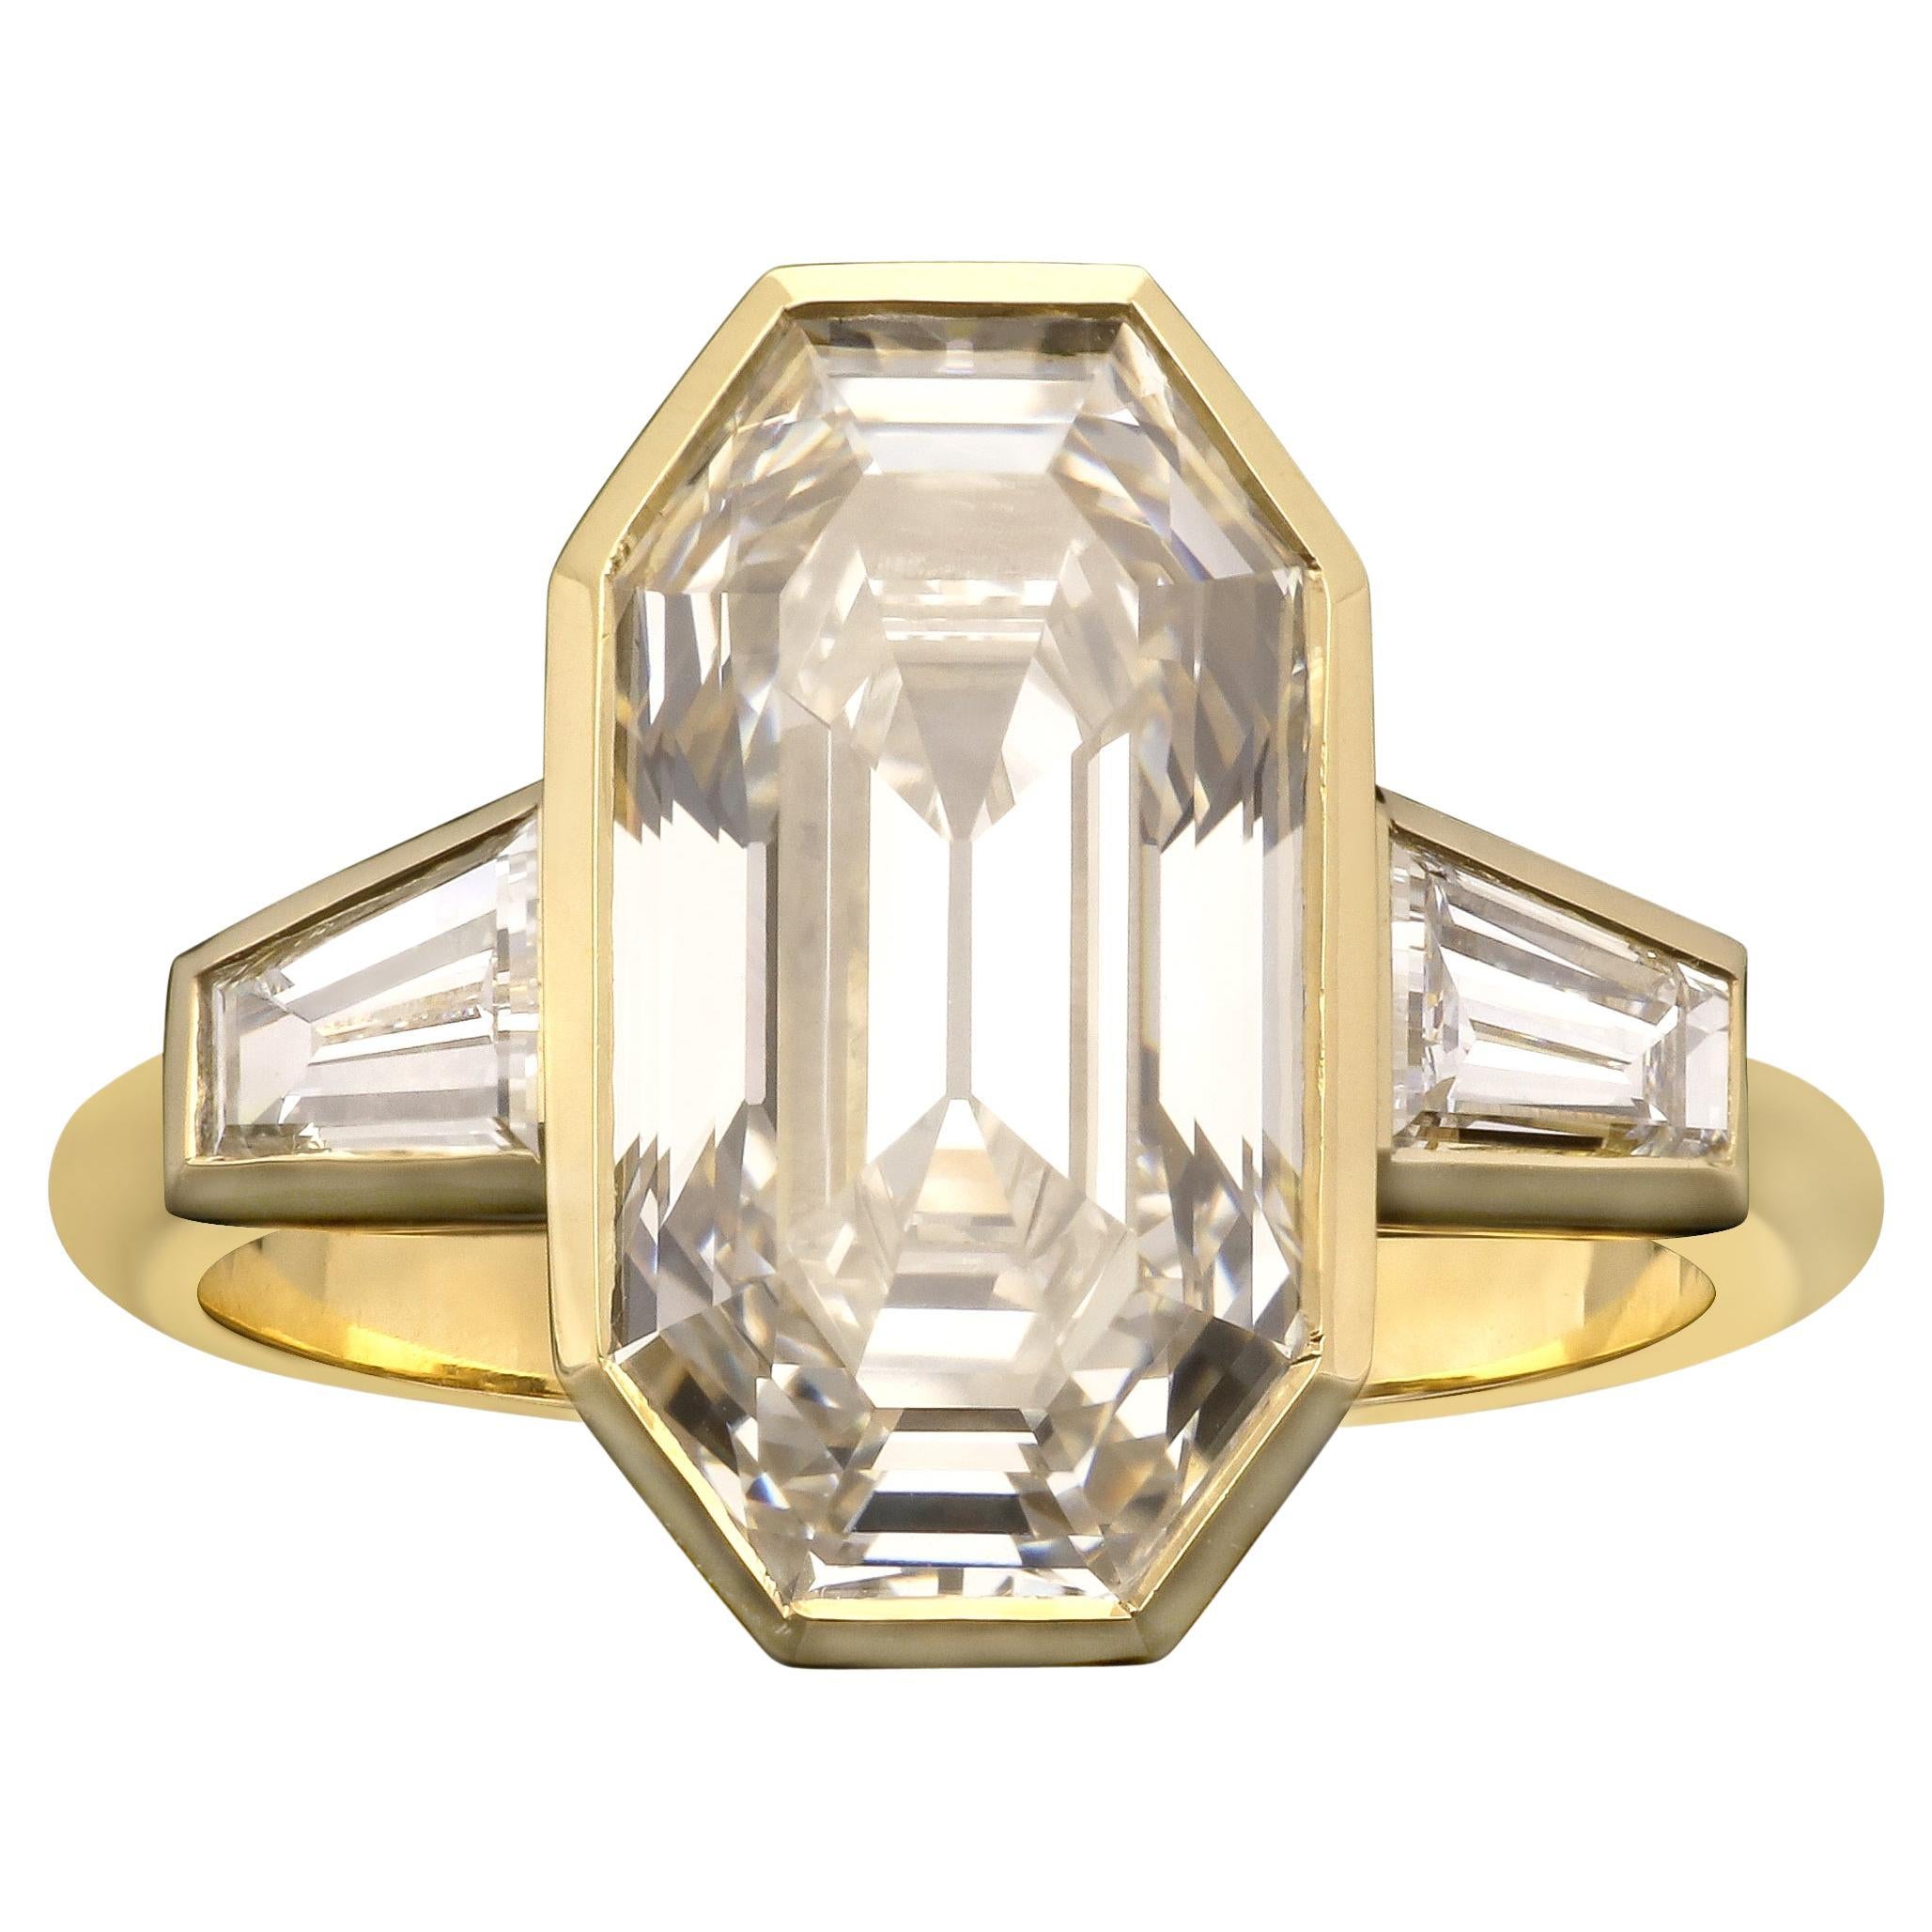 Hancocks 5.38ct Old Emerald Cut Diamond Bezel Set Gold Ring Tapered Shoulders